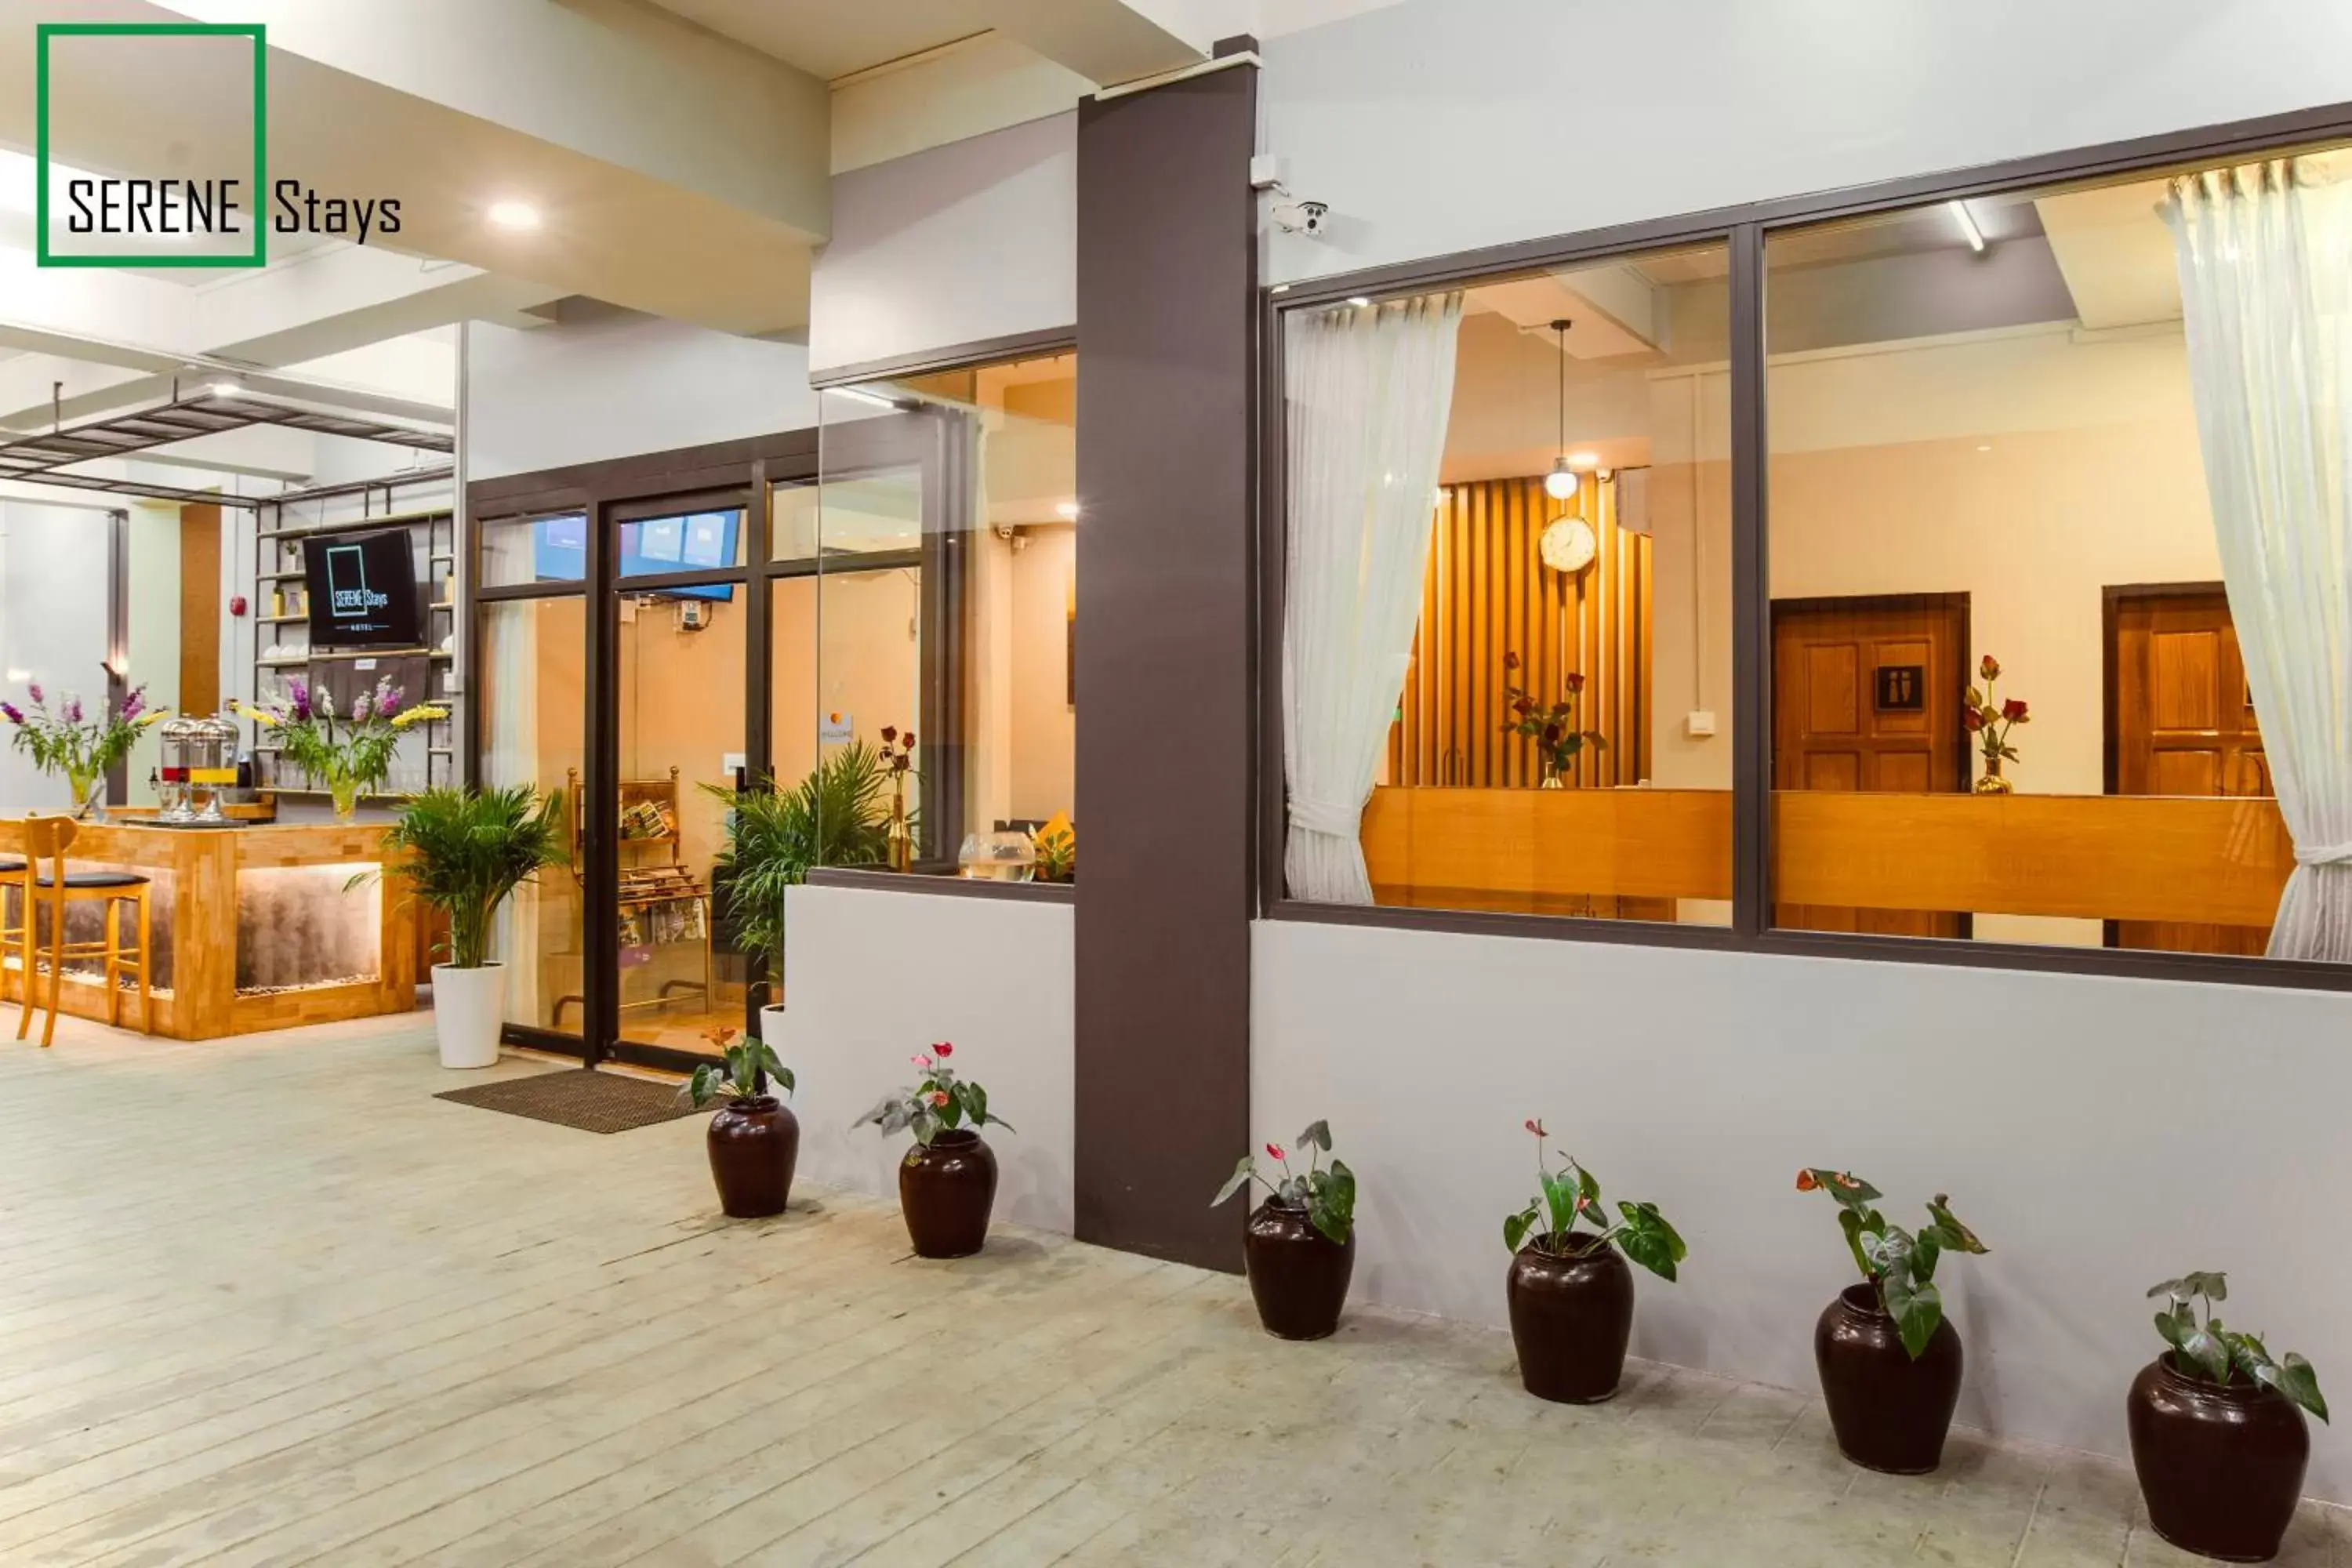 Lobby or reception in SERENE Stays Hotel